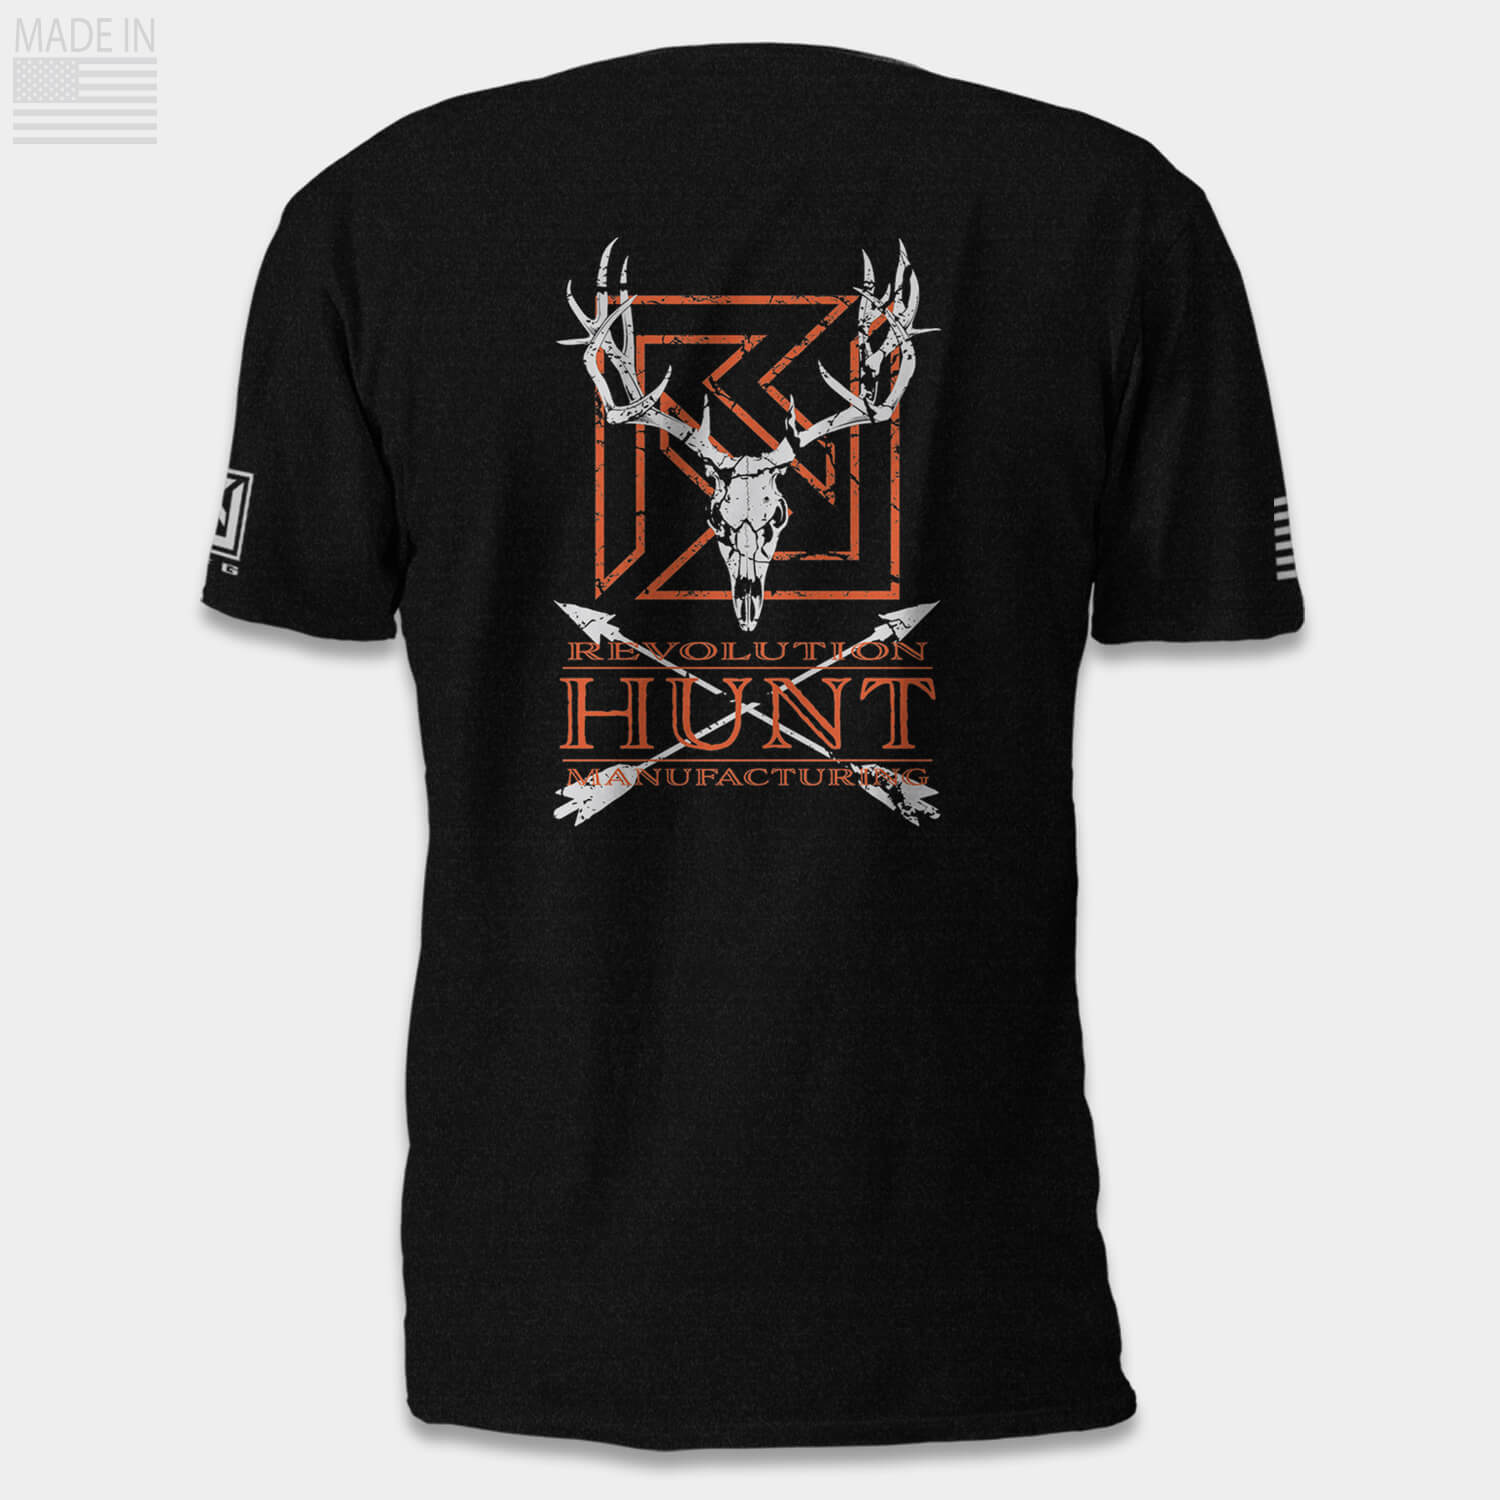 American Made Deer Hunting Shirt with Deer Skull and Arrows